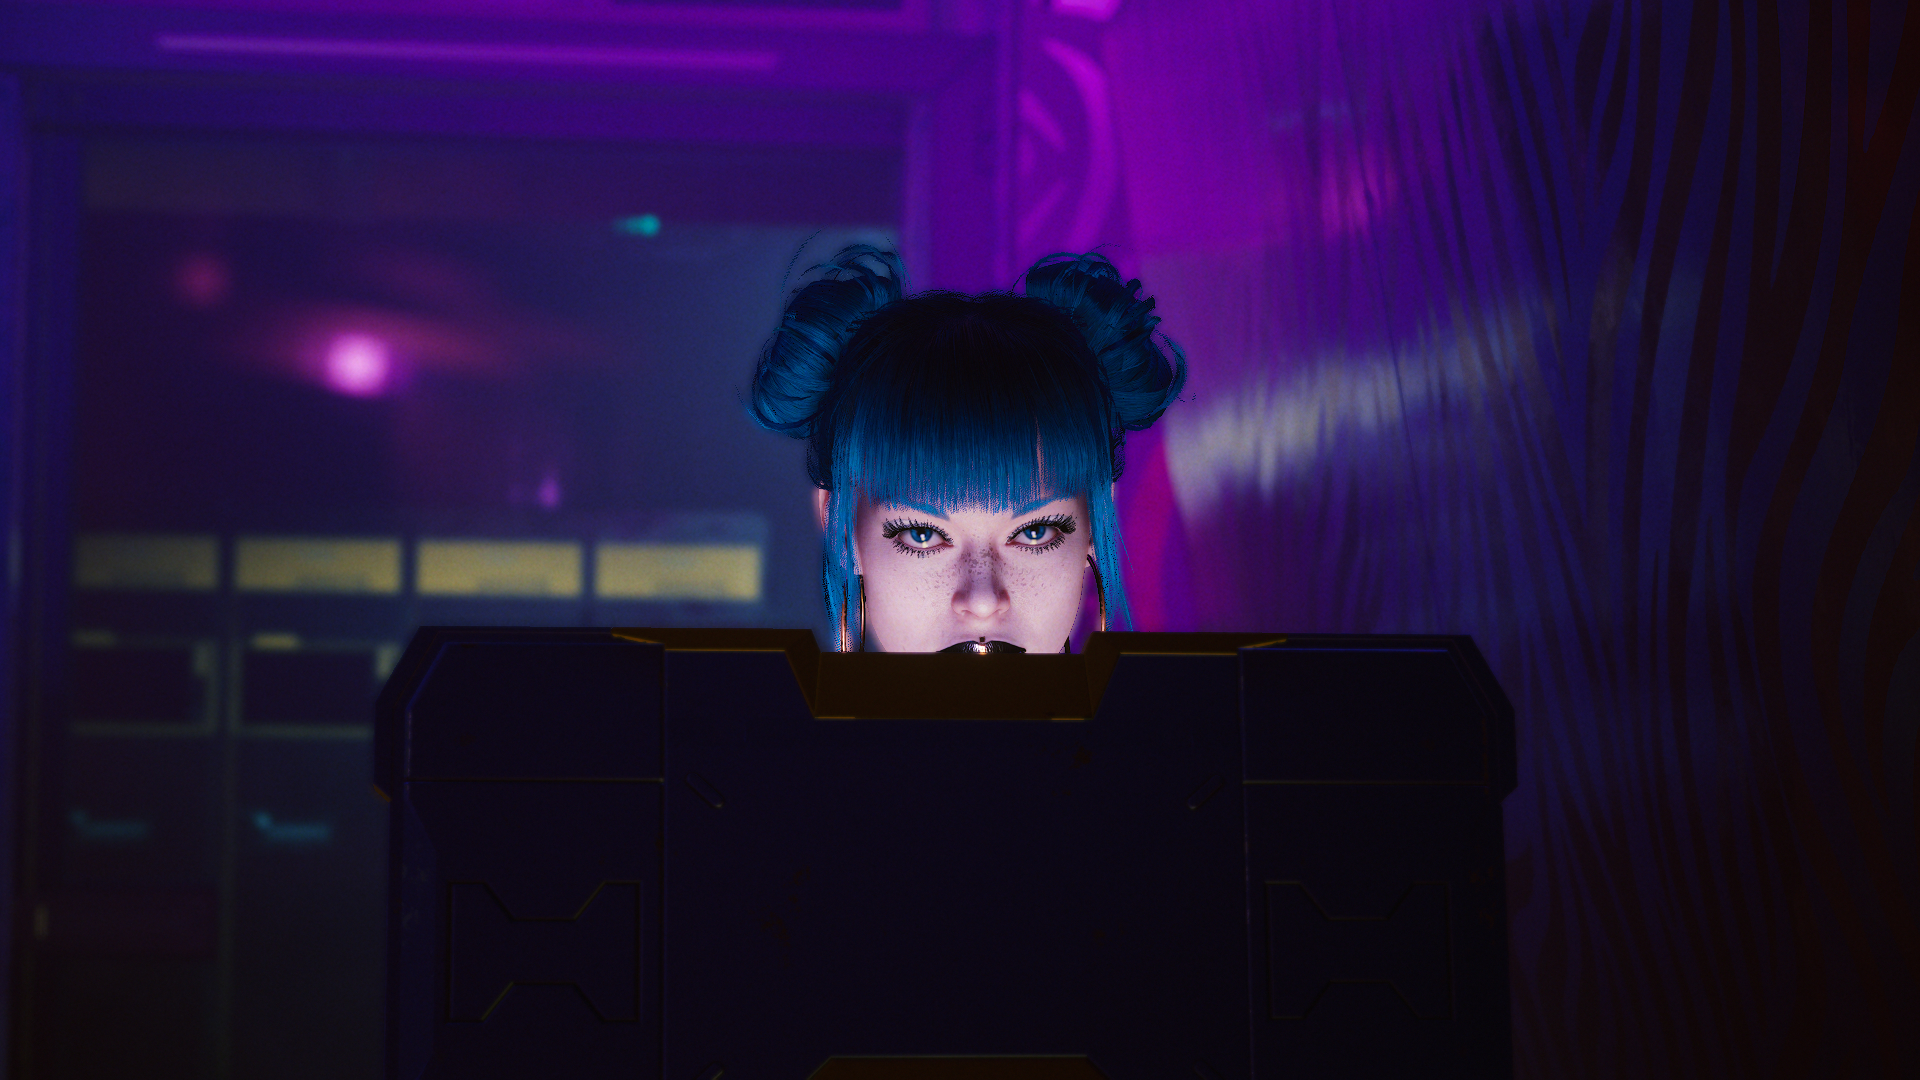 cyberpunk 2077 girl with blue hair